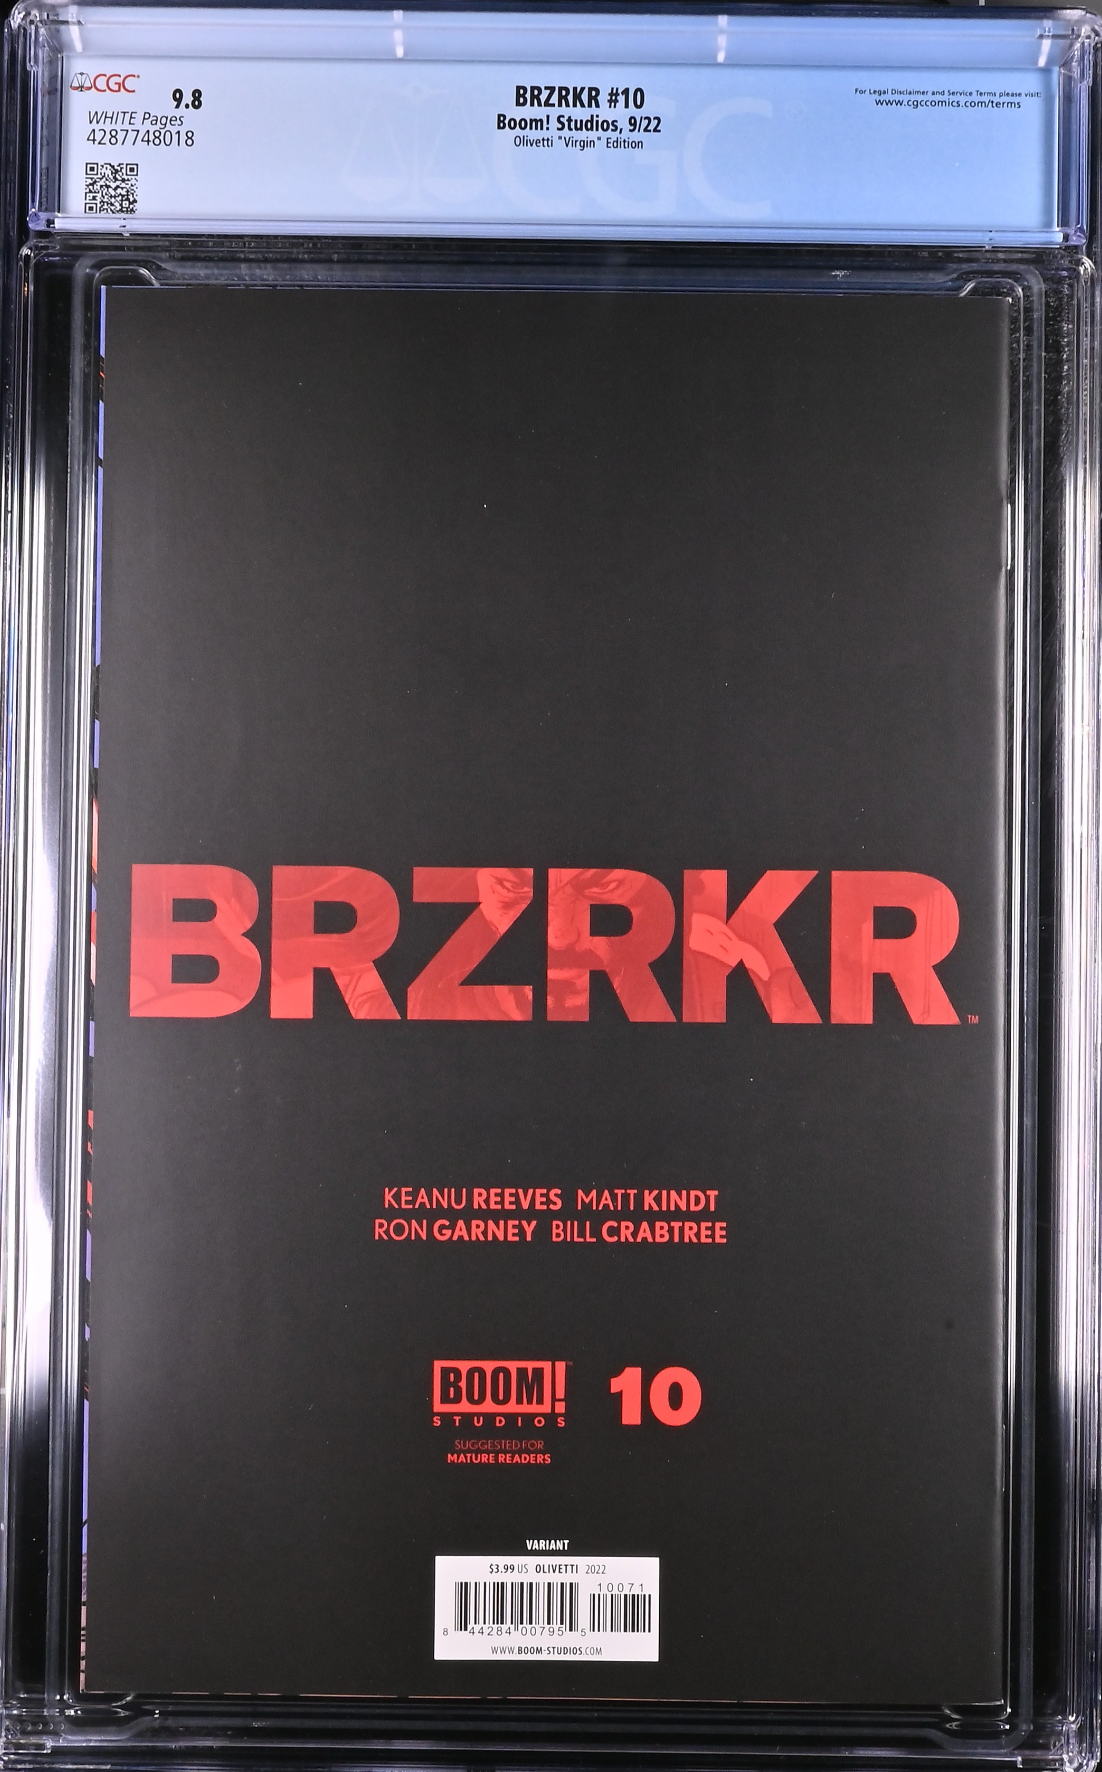 BRZRKR #10 Olivetti 1:75 Virgin Retailer Incentive Variant CGC 9.8 (Berzerker)